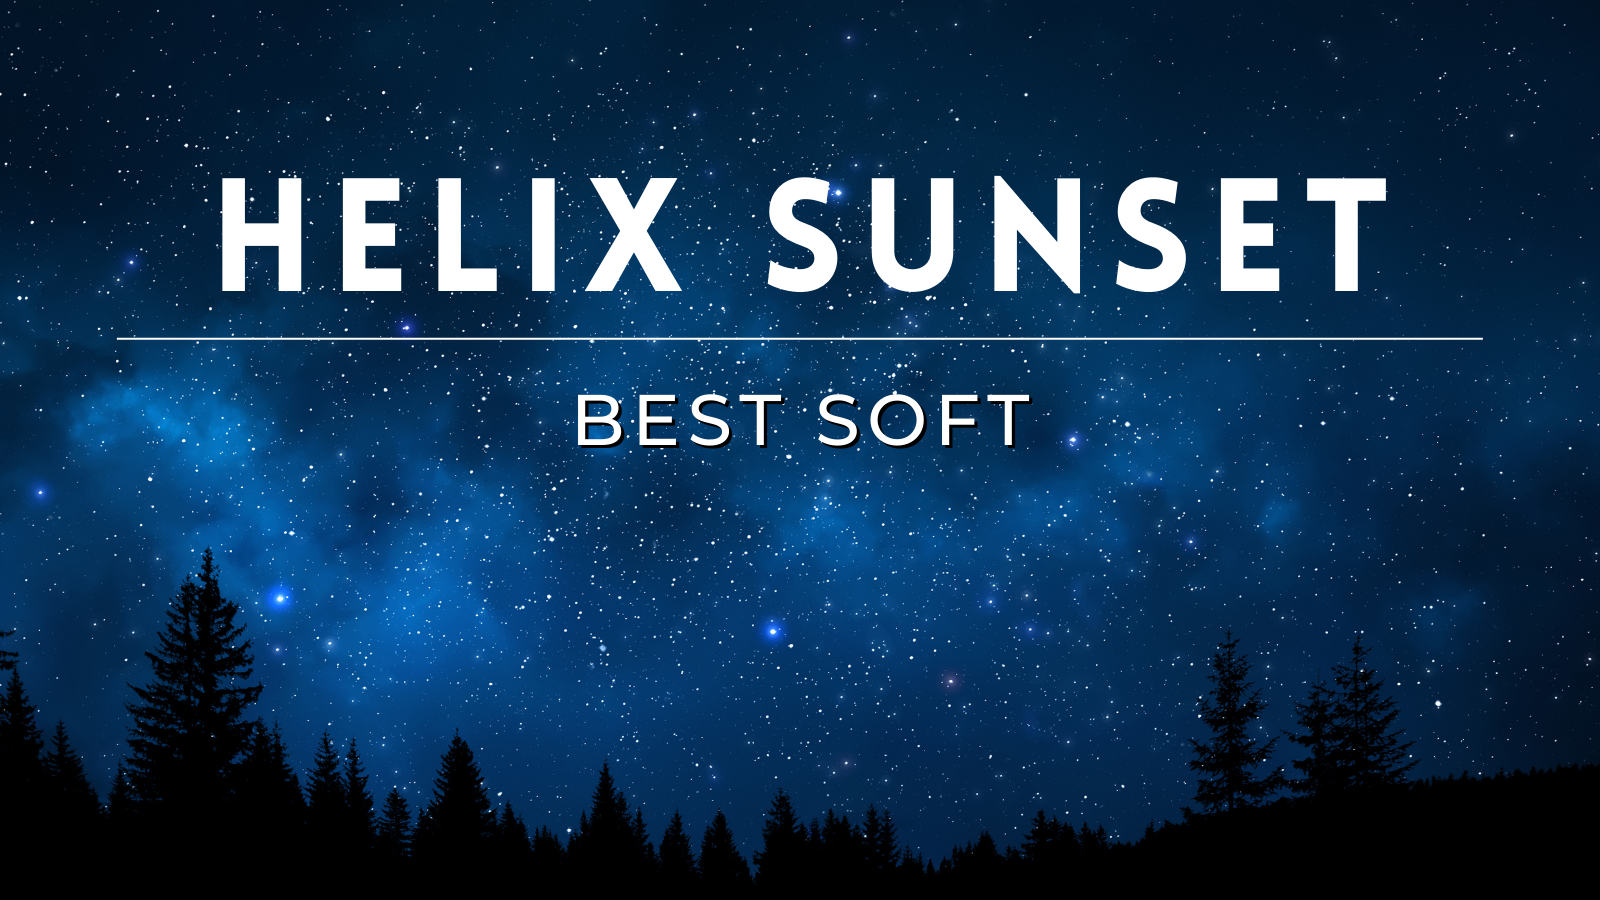 Helix Sunset Mattress Review Graphic